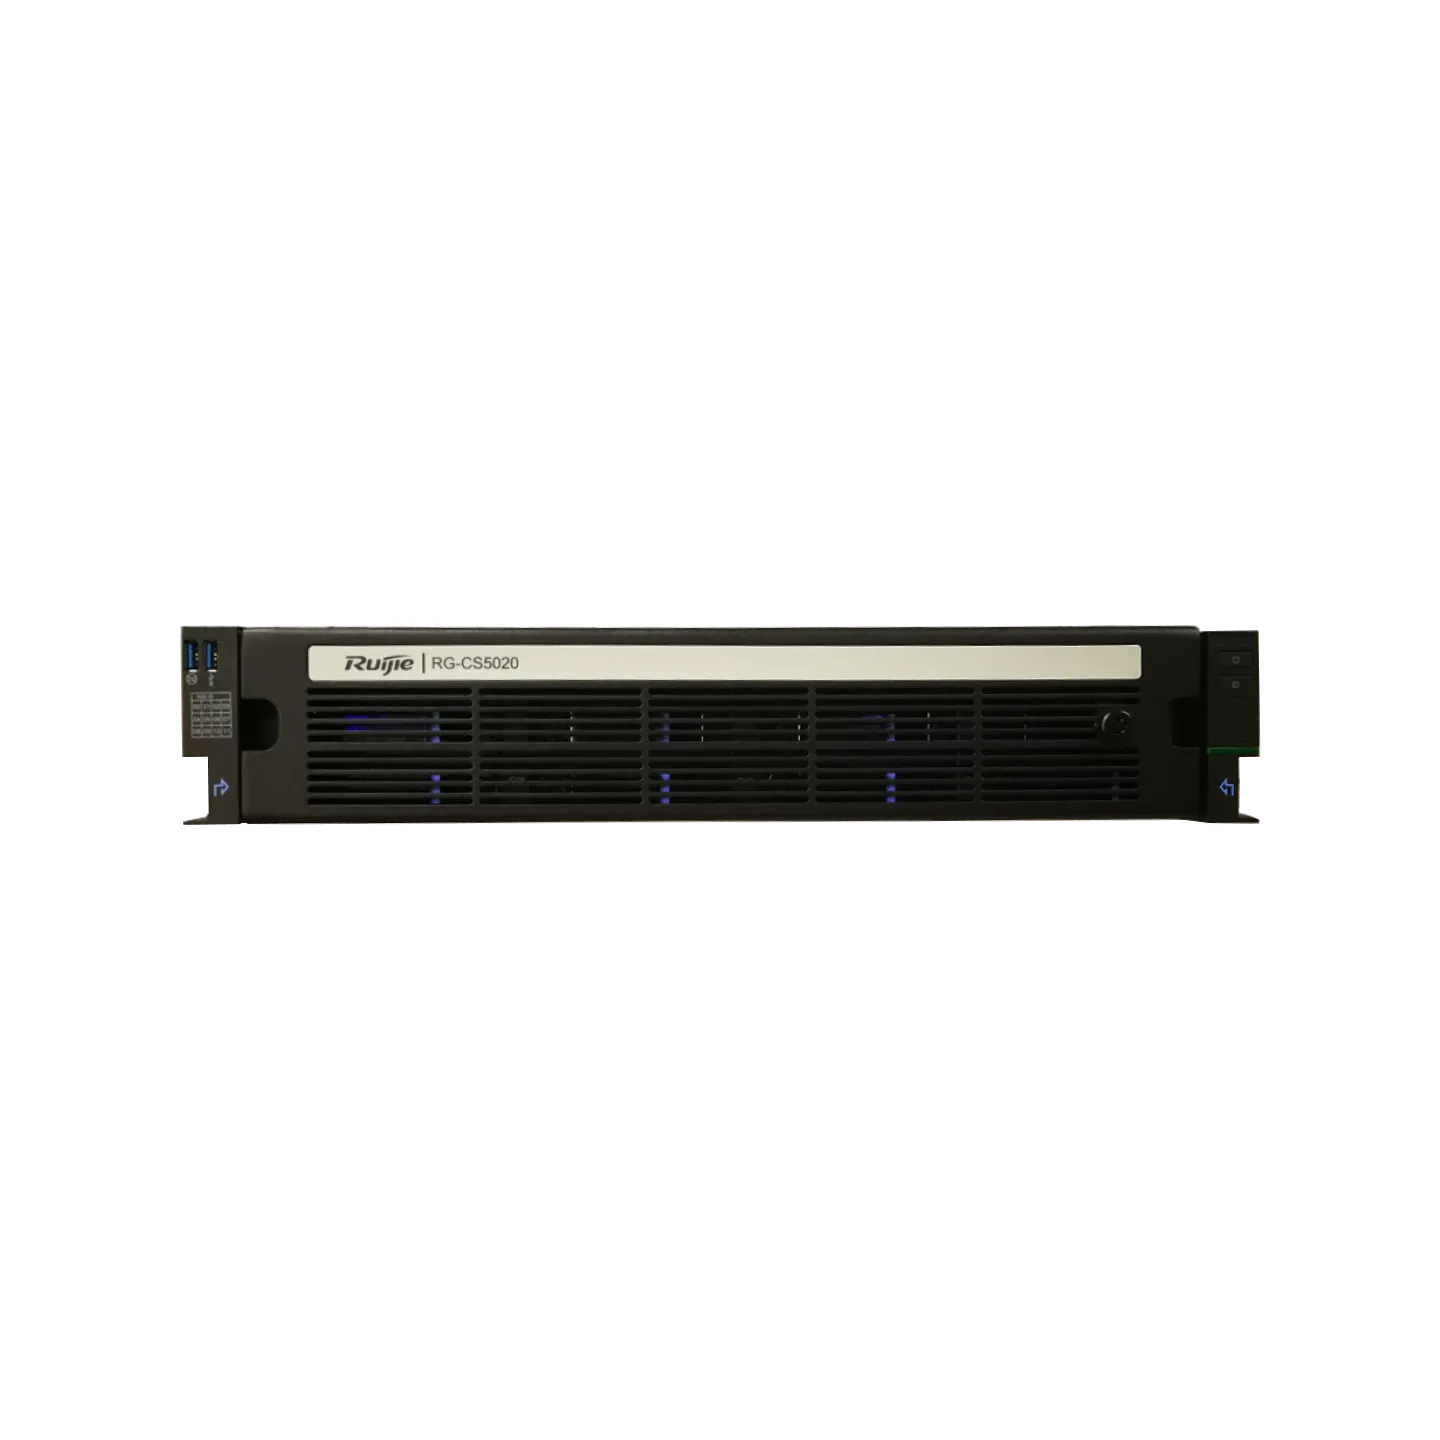 RG-CS5020系列云服务器